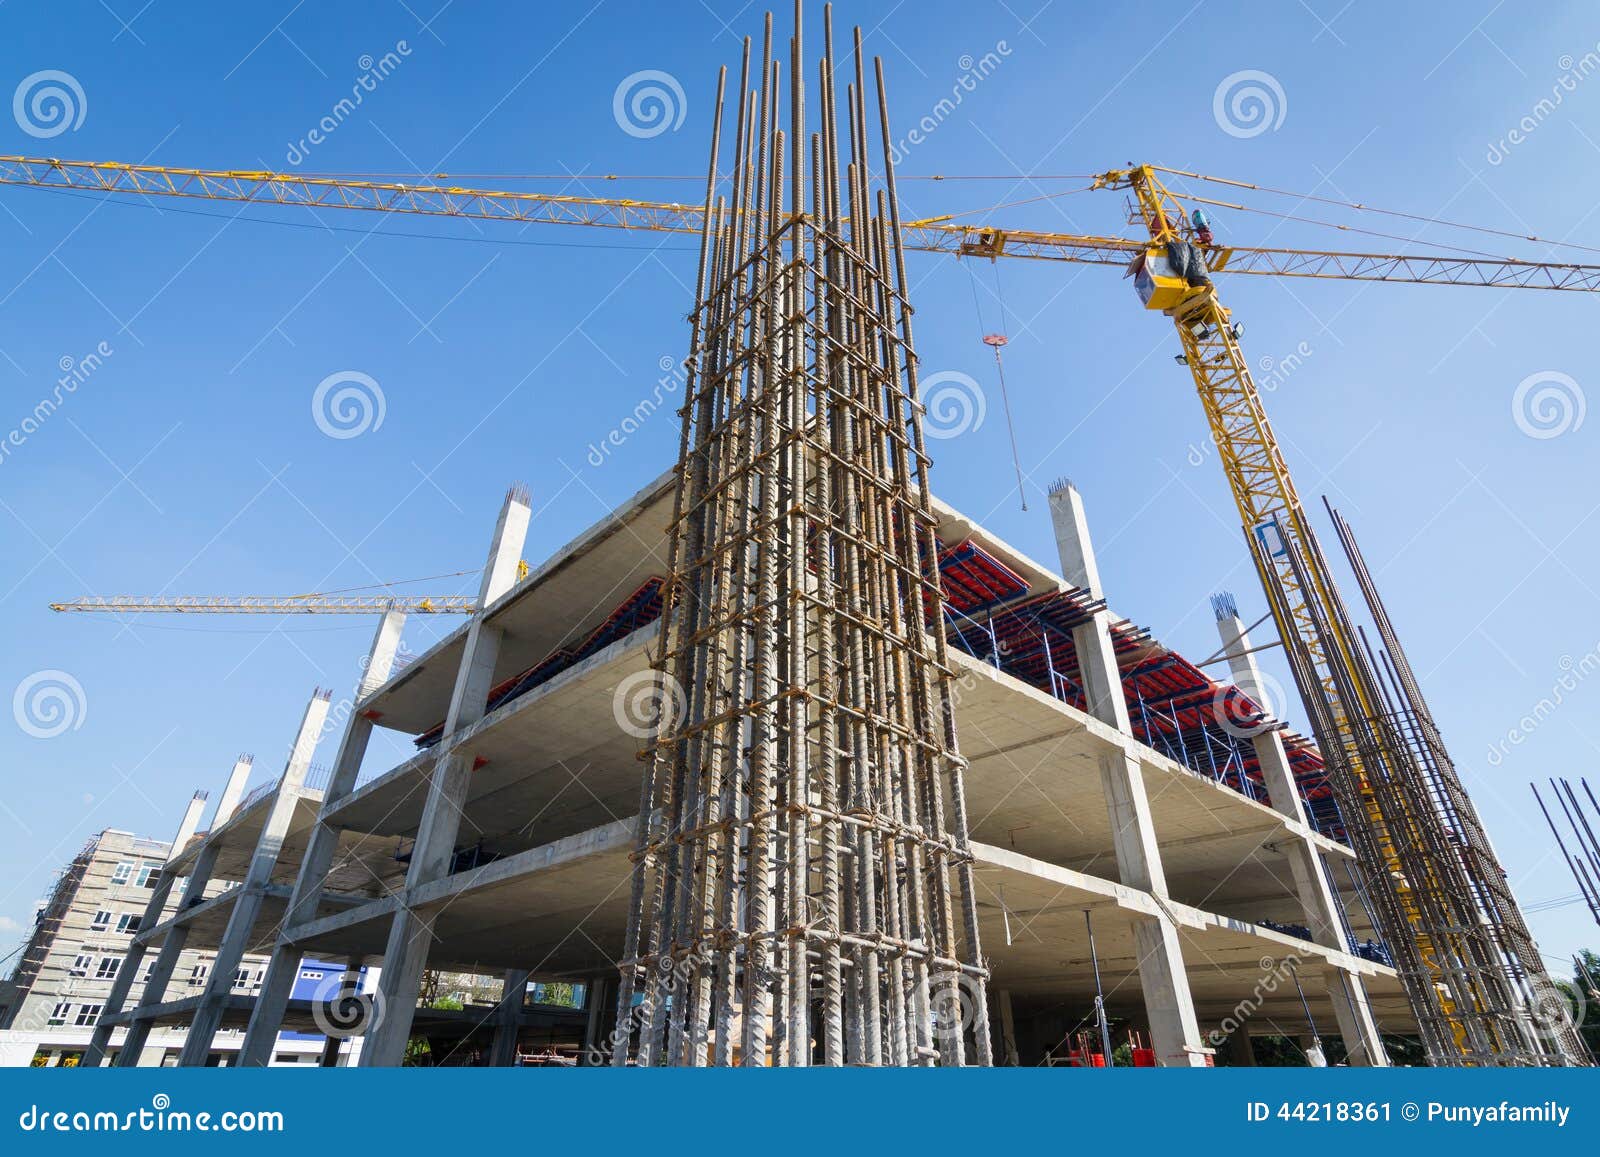 cranes building construct site